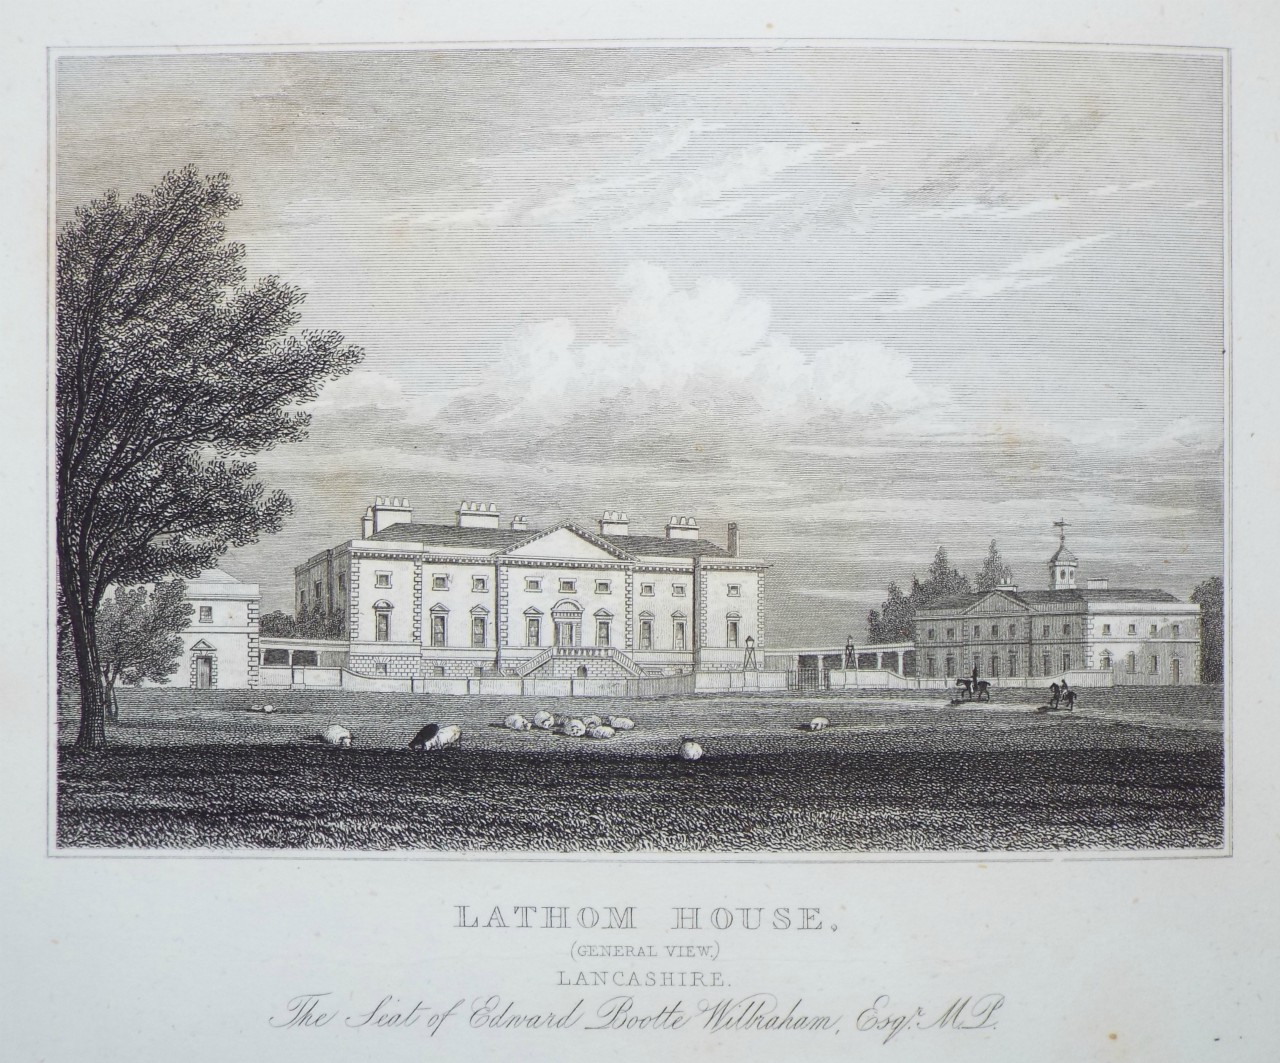 Print - Lathom House, (General View) Lancashire. The Seat of Edward Bootle Wilbraham, Esqr. M.P. - Radclyffe